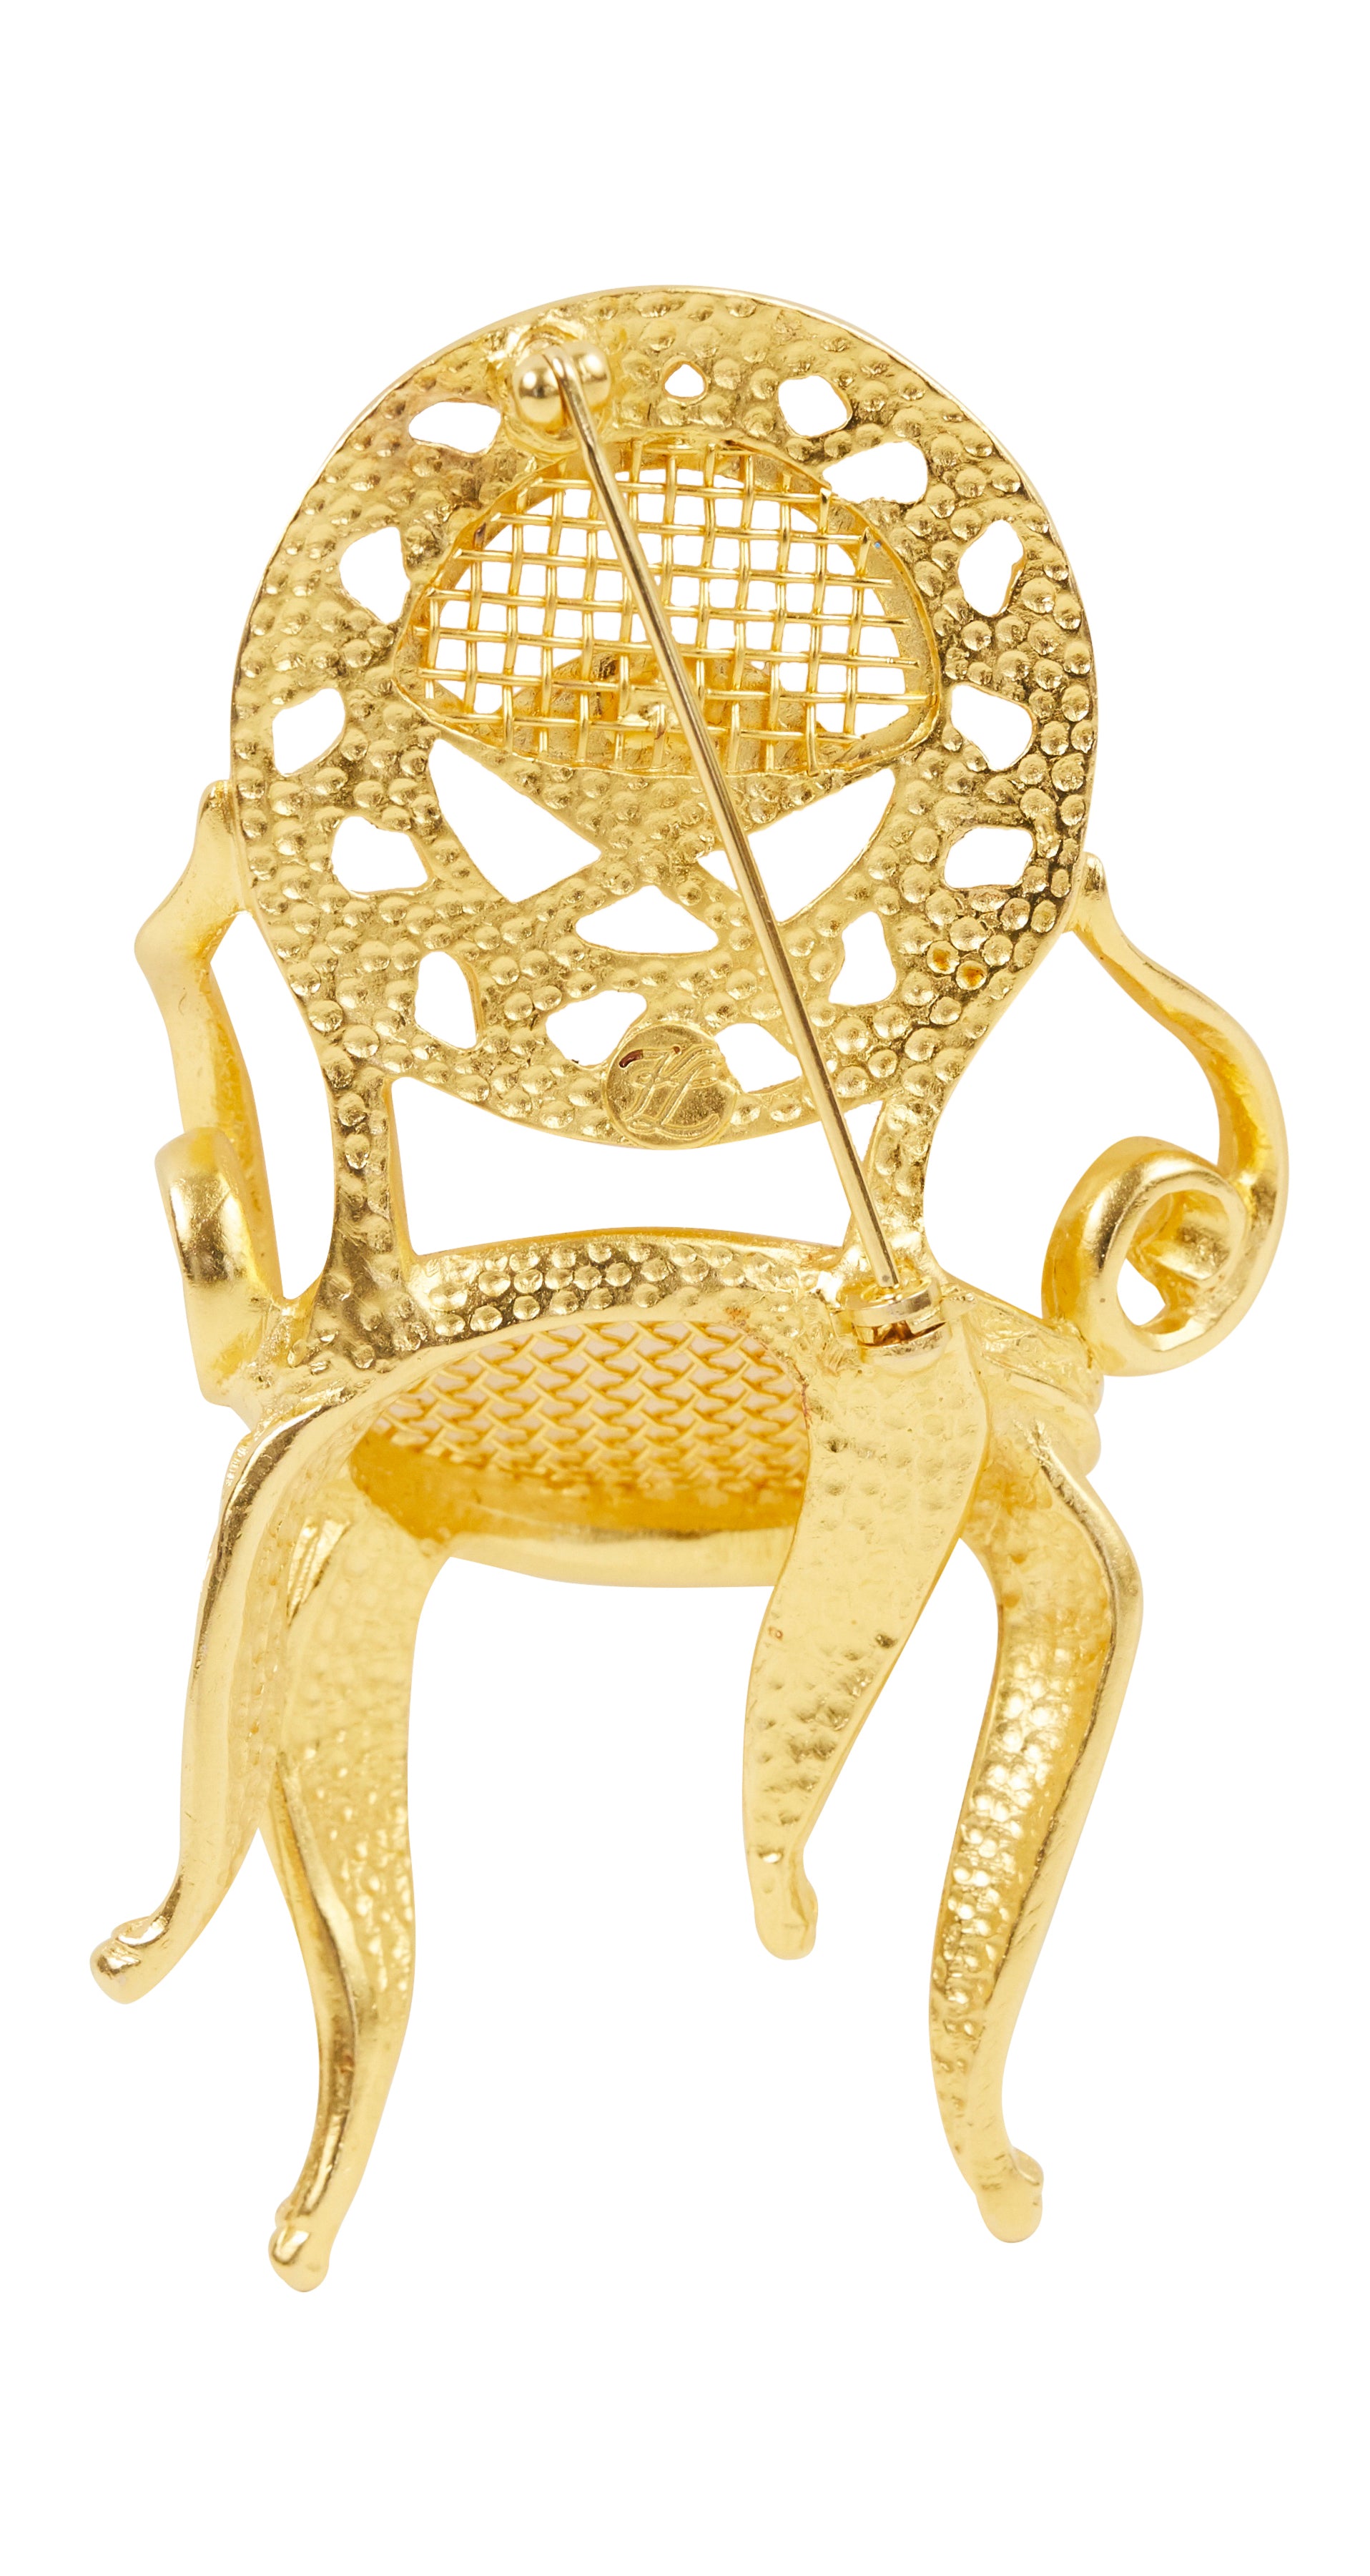 1980s Rococo Louis XV Gold Chair Brooch